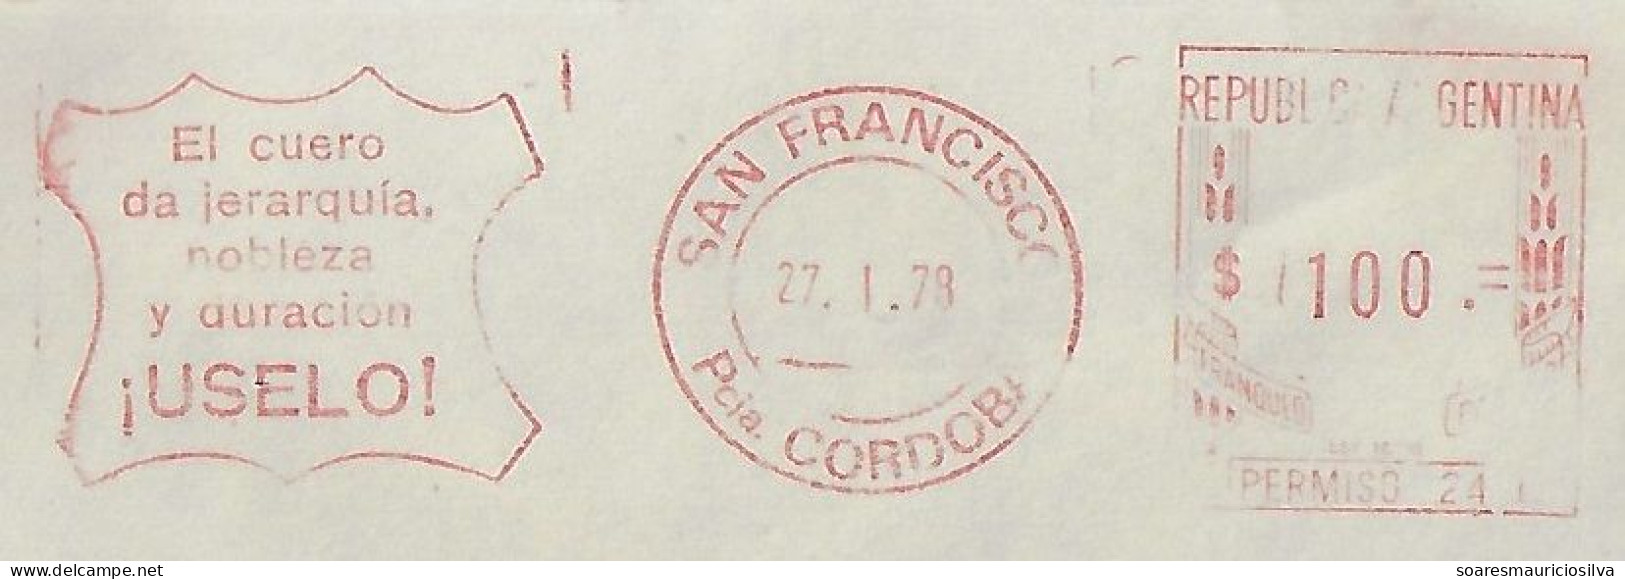 Argentina 1978 Cover San Francisco Obispo Trejo Meter Stamp Postalia Slogan Leather Gives Hierarchy Nobility Durability - Brieven En Documenten